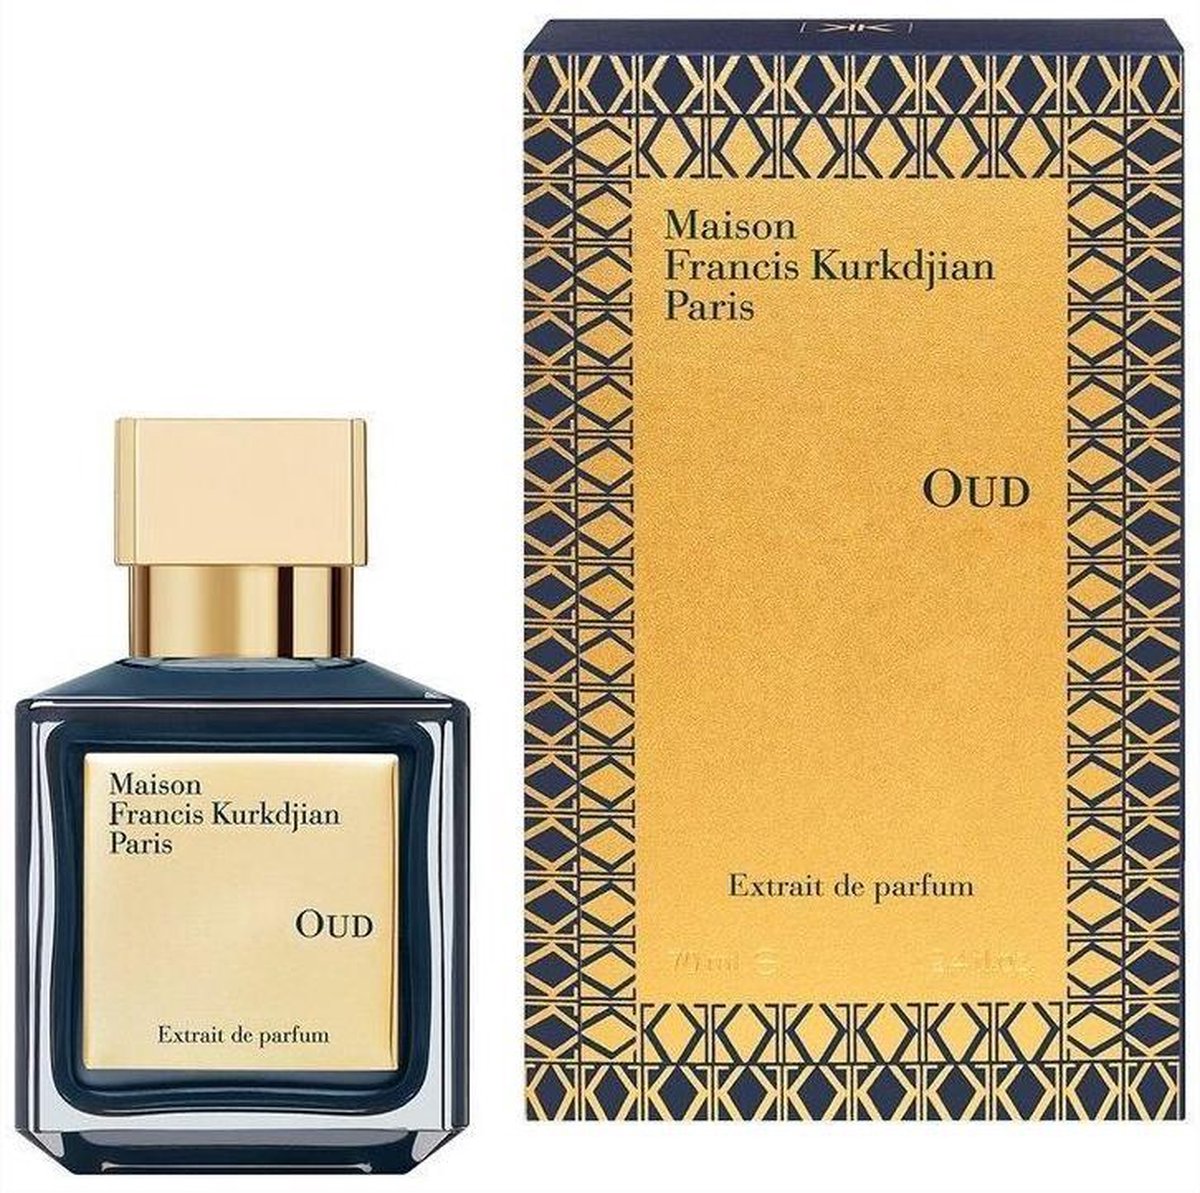 Maison Francis Kurkdjian Oud by Maison Francis Kurkdjian 71 ml - Extrait De Parfum (Unisex)